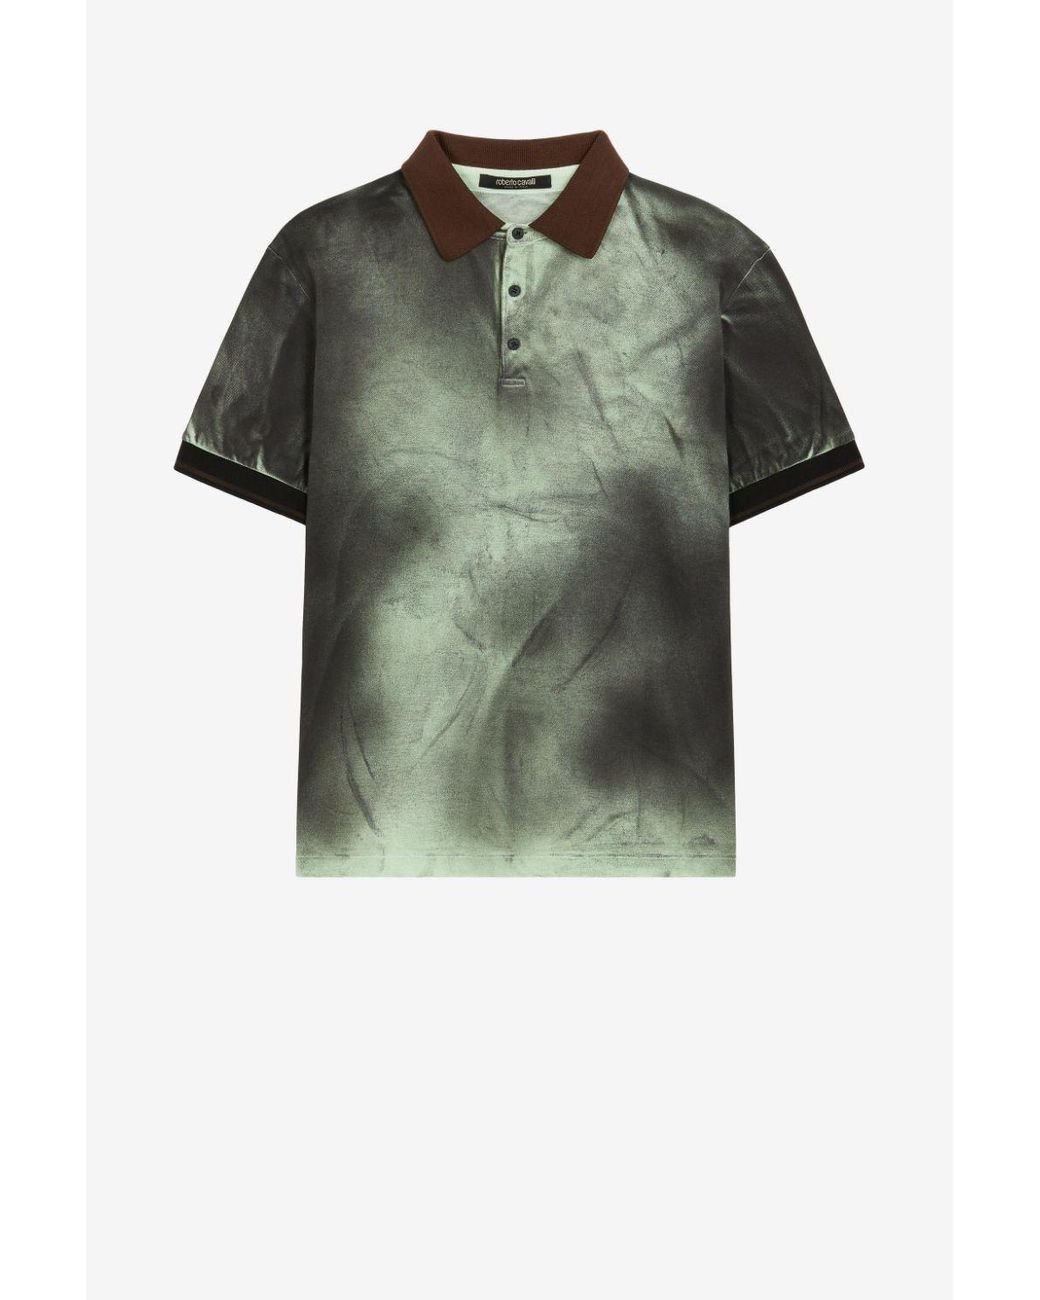 Roberto Cavalli Men's Big Stithcwork Logo Polo Shirt Size S New with Tag